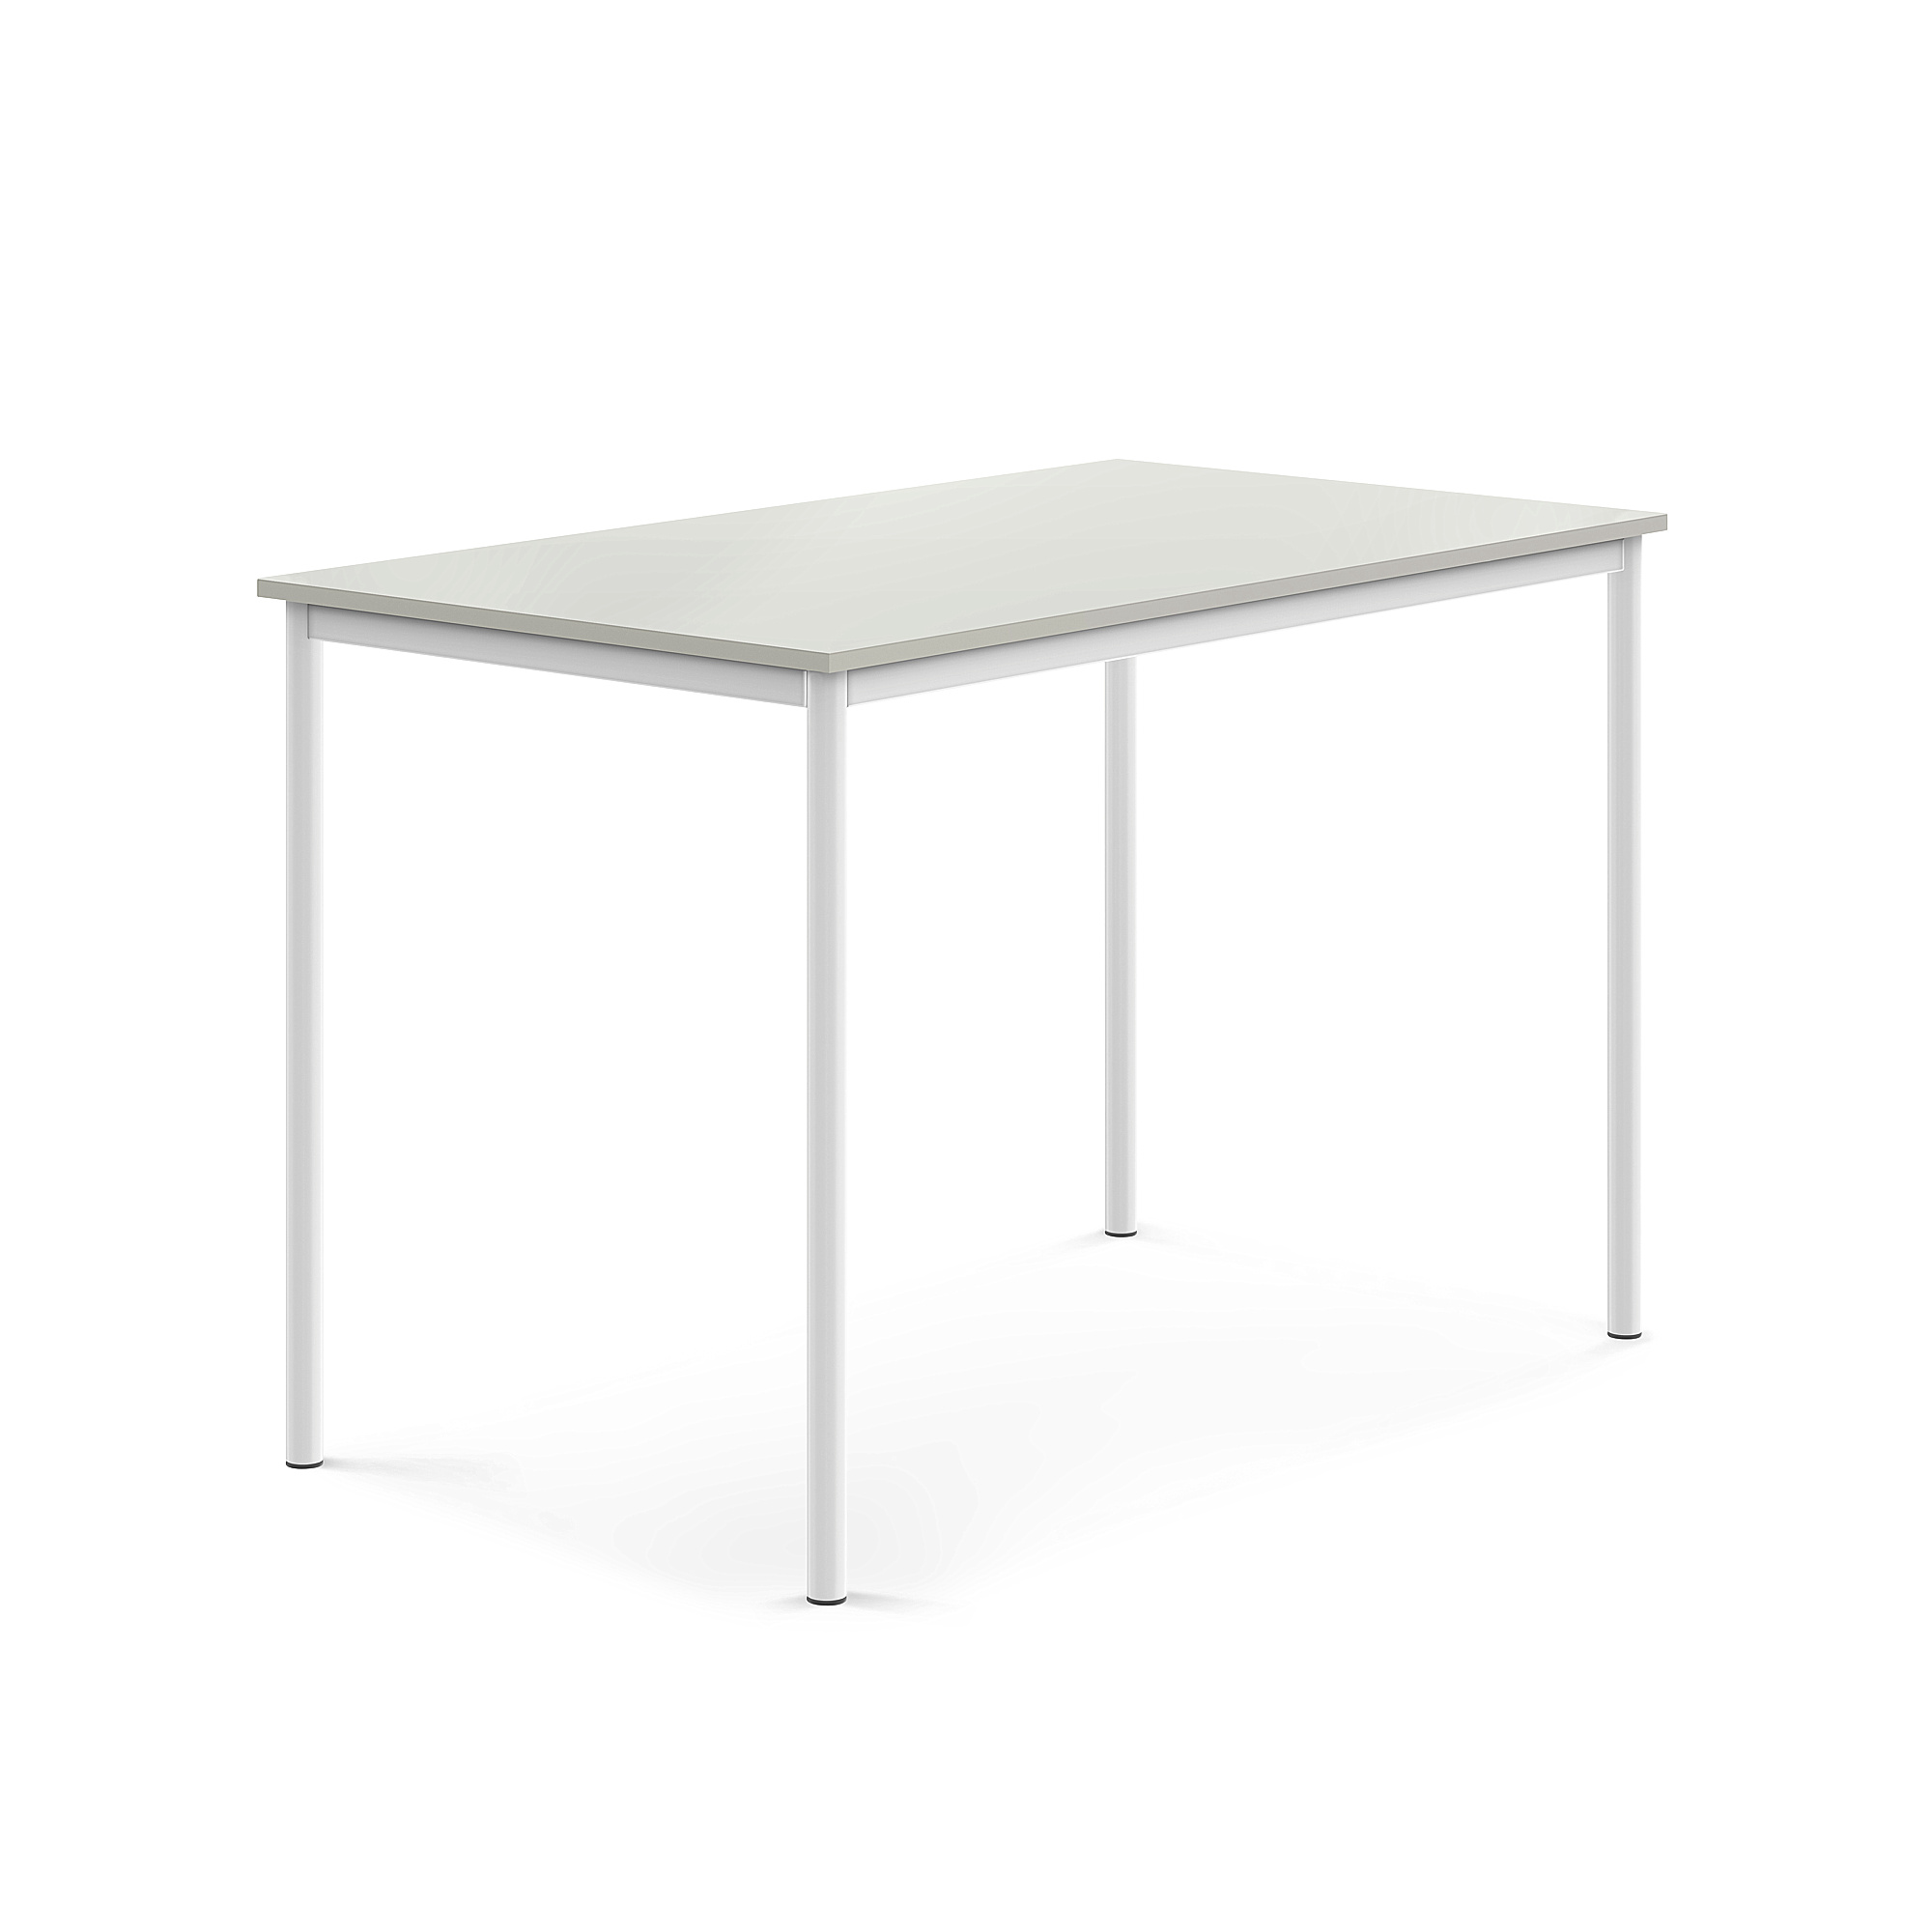 Stůl SONITUS, 1400x800x900 mm, bílé nohy, HPL deska tlumící hluk, šedá